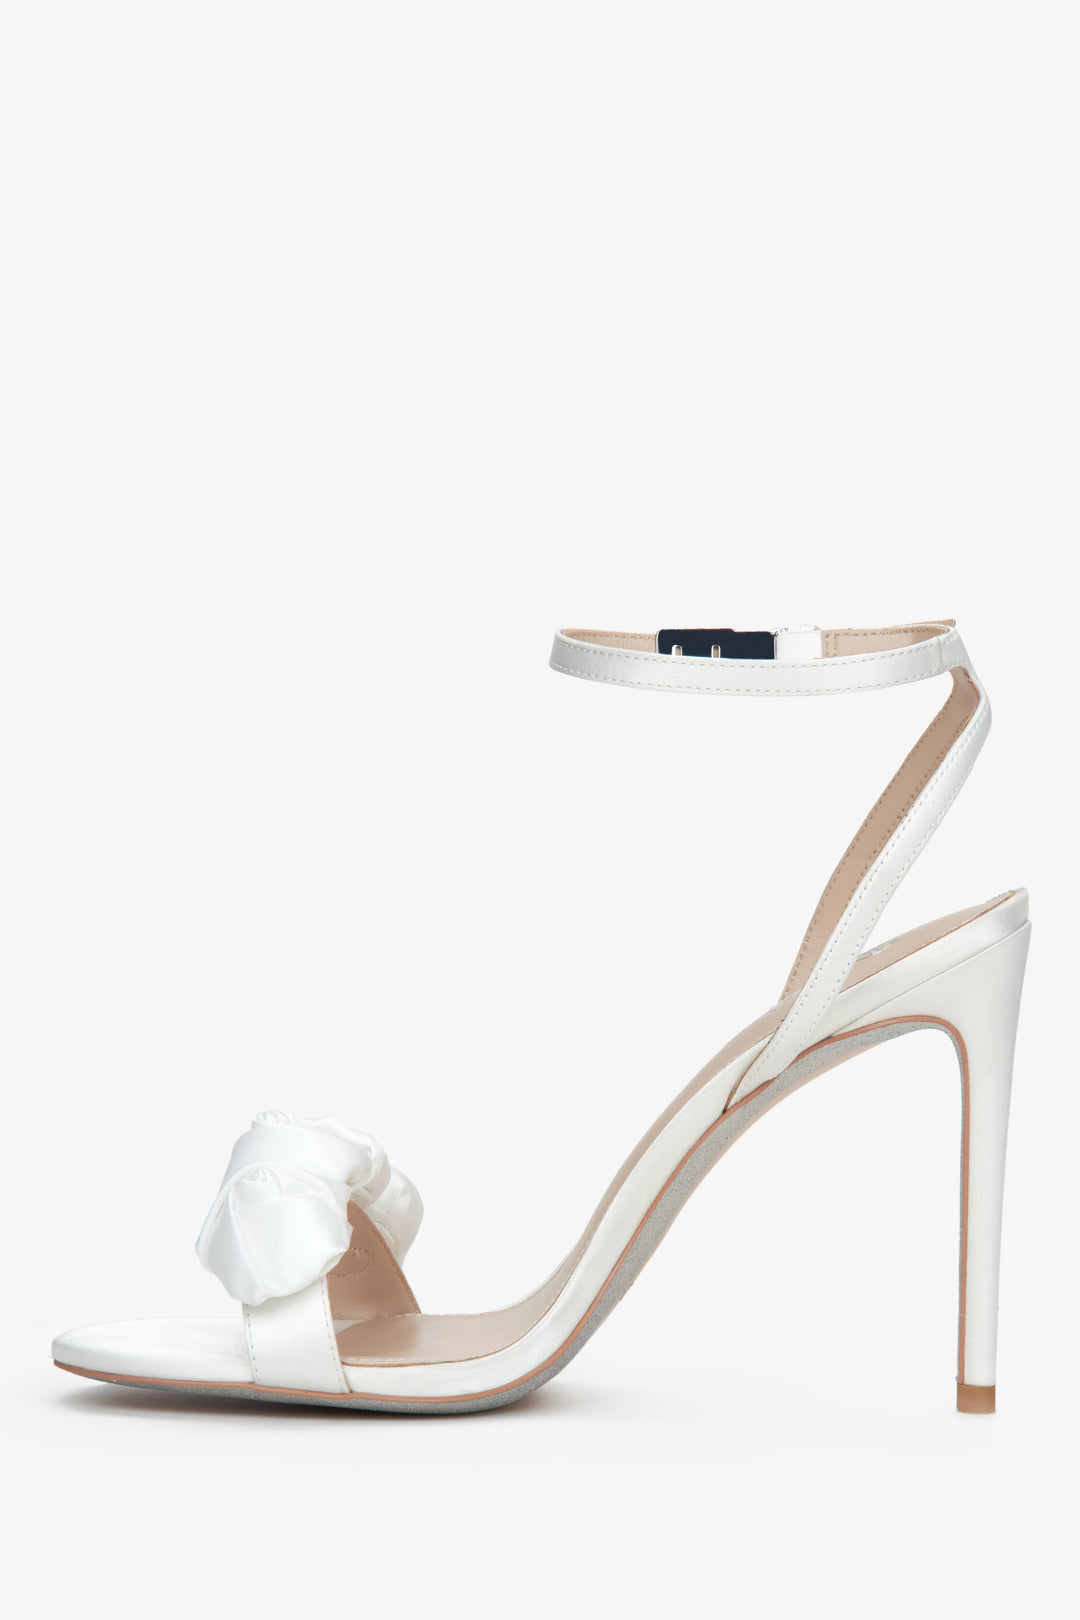 Estro women's white high heel sandals - shoe profile.